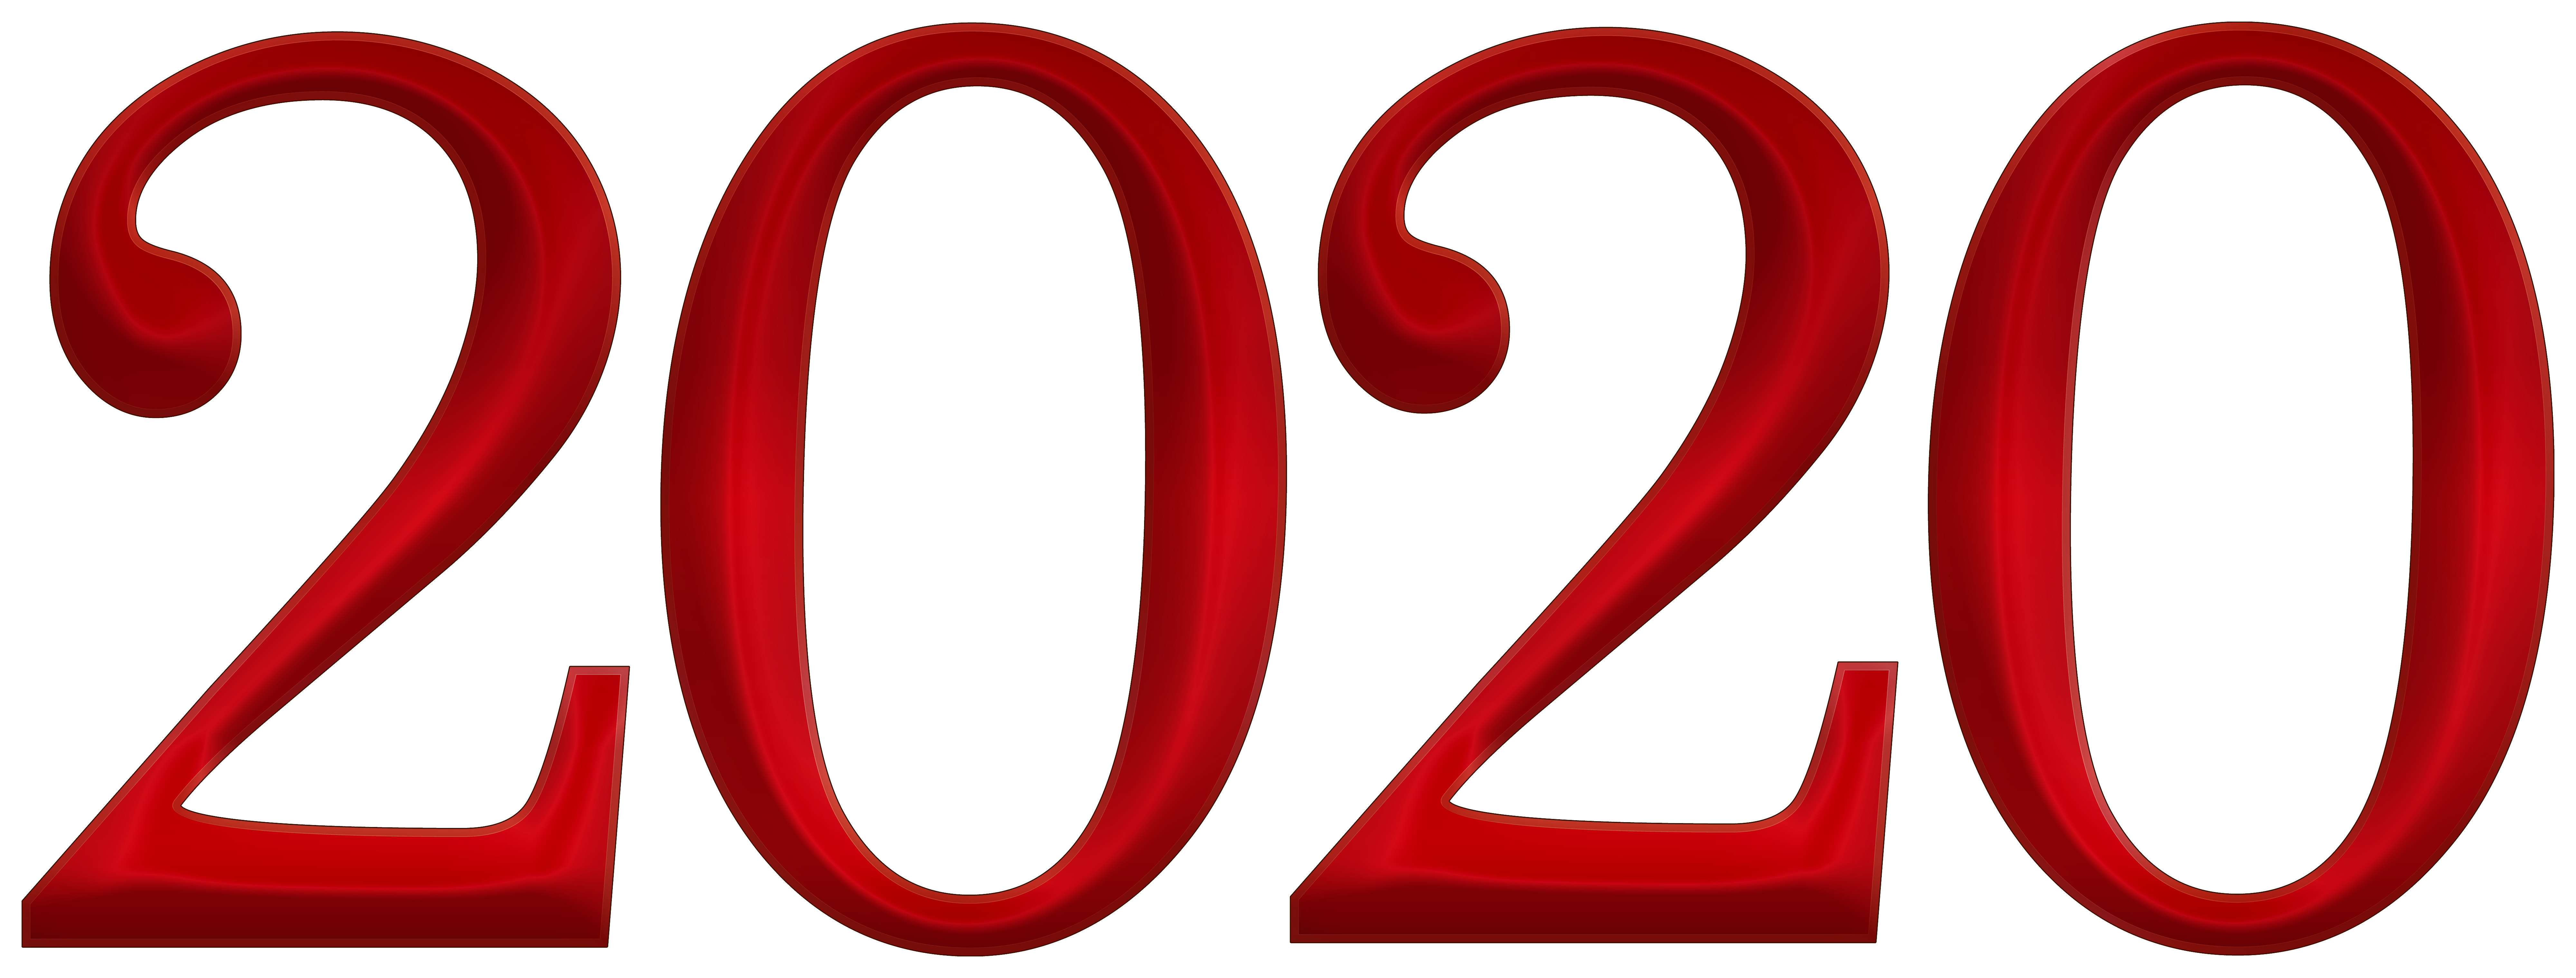 2024 год на прозрачном фоне png. 2020 Надпись. Цифры 2020 на прозрачном фоне. 2020 Красные цифры. Красные цифры на прозрачном фоне.